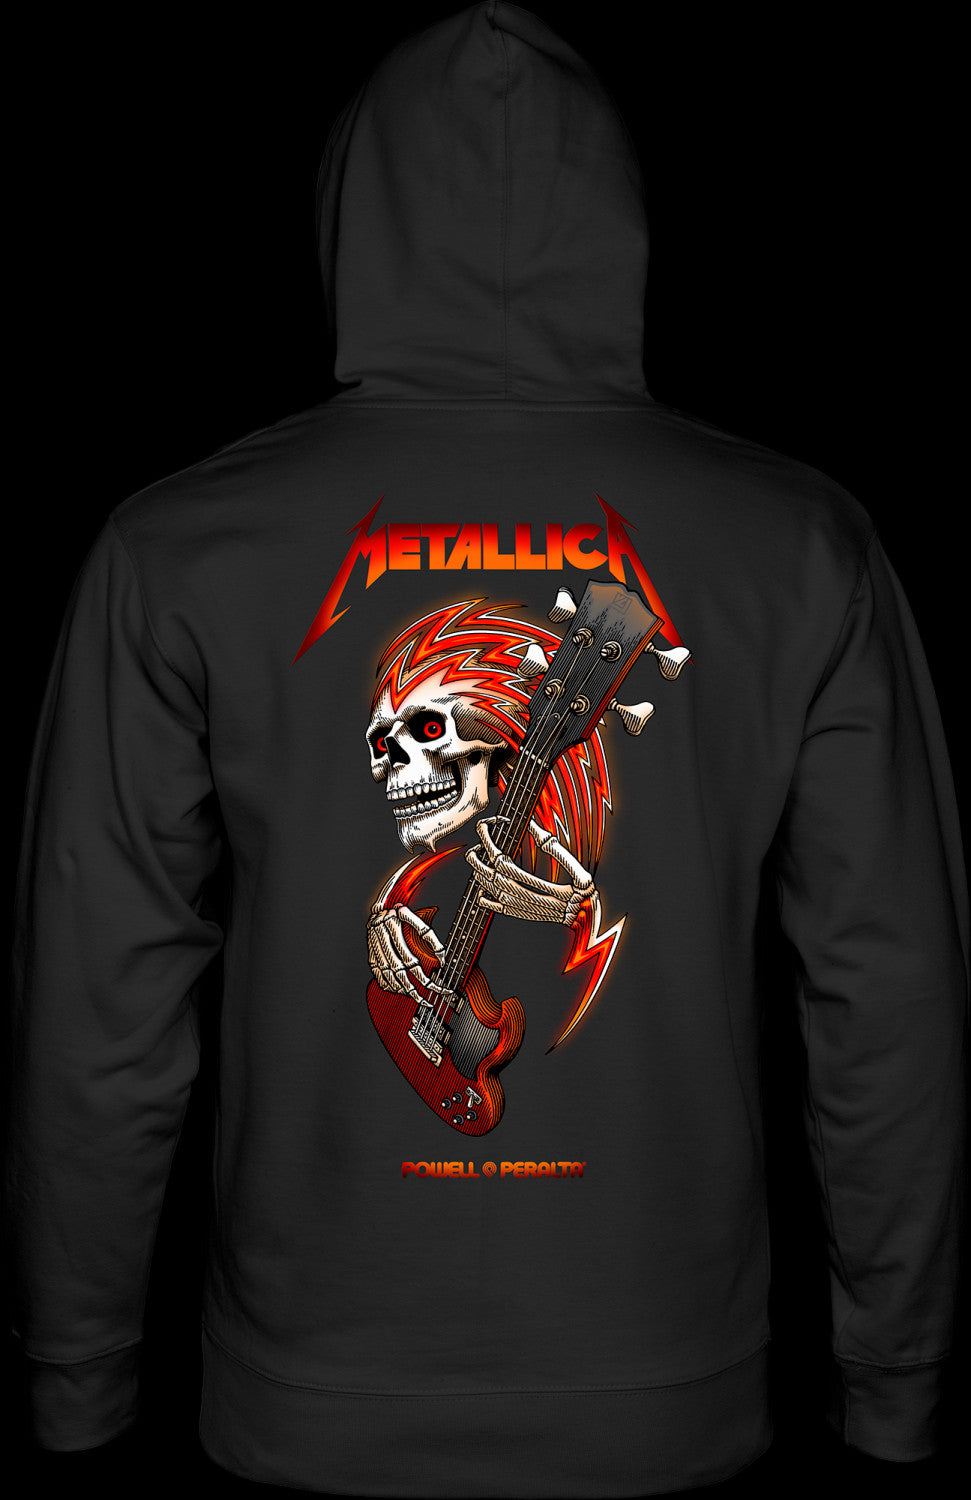 Powell Peralta Metallica Collab Hooded Sweatshirt Mid Weight Black